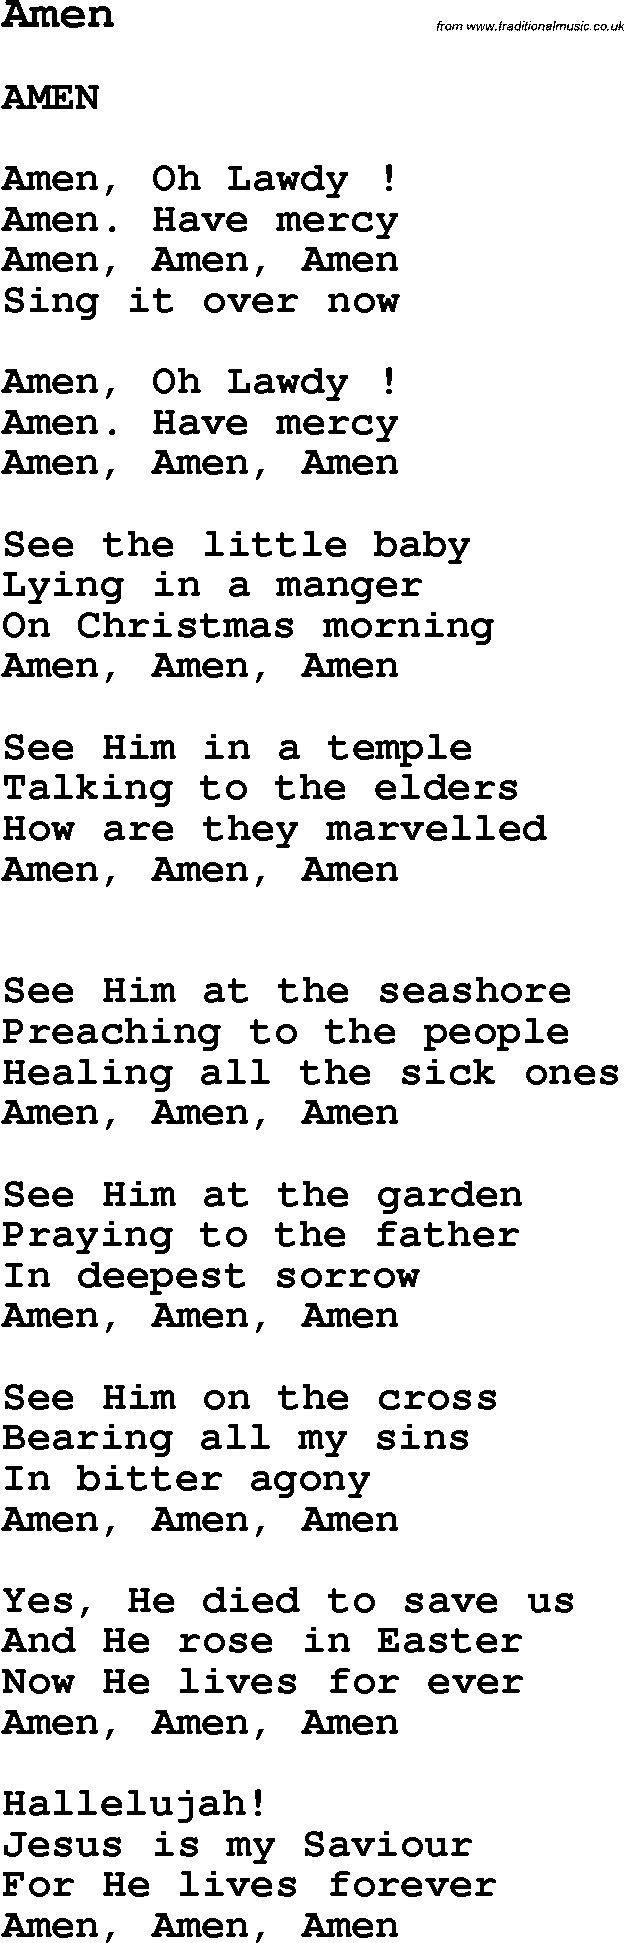 Negro Spiritual Song Lyrics for Amen